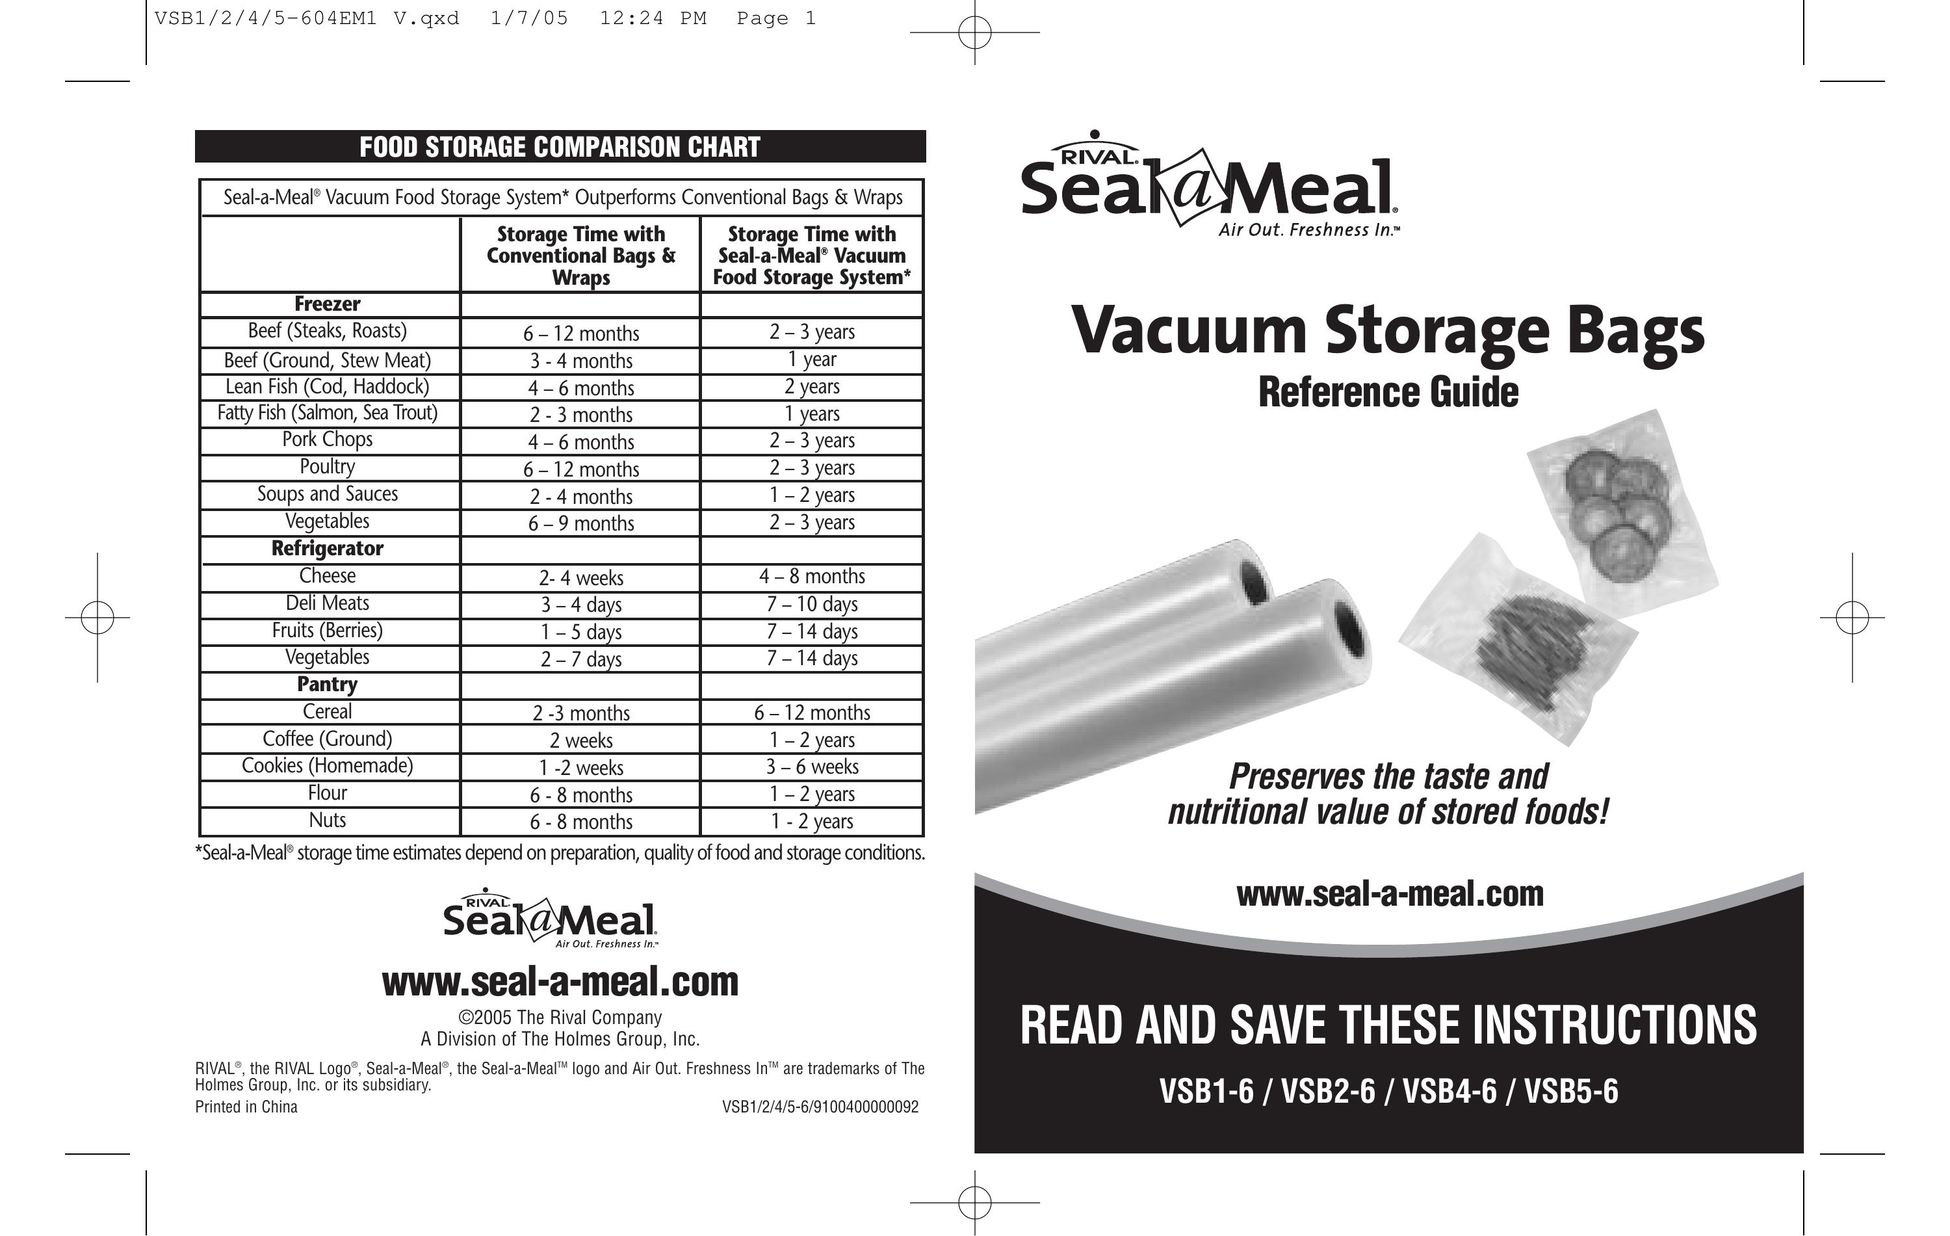 Seal-a-Meal VSB5-6 Food Saver User Manual